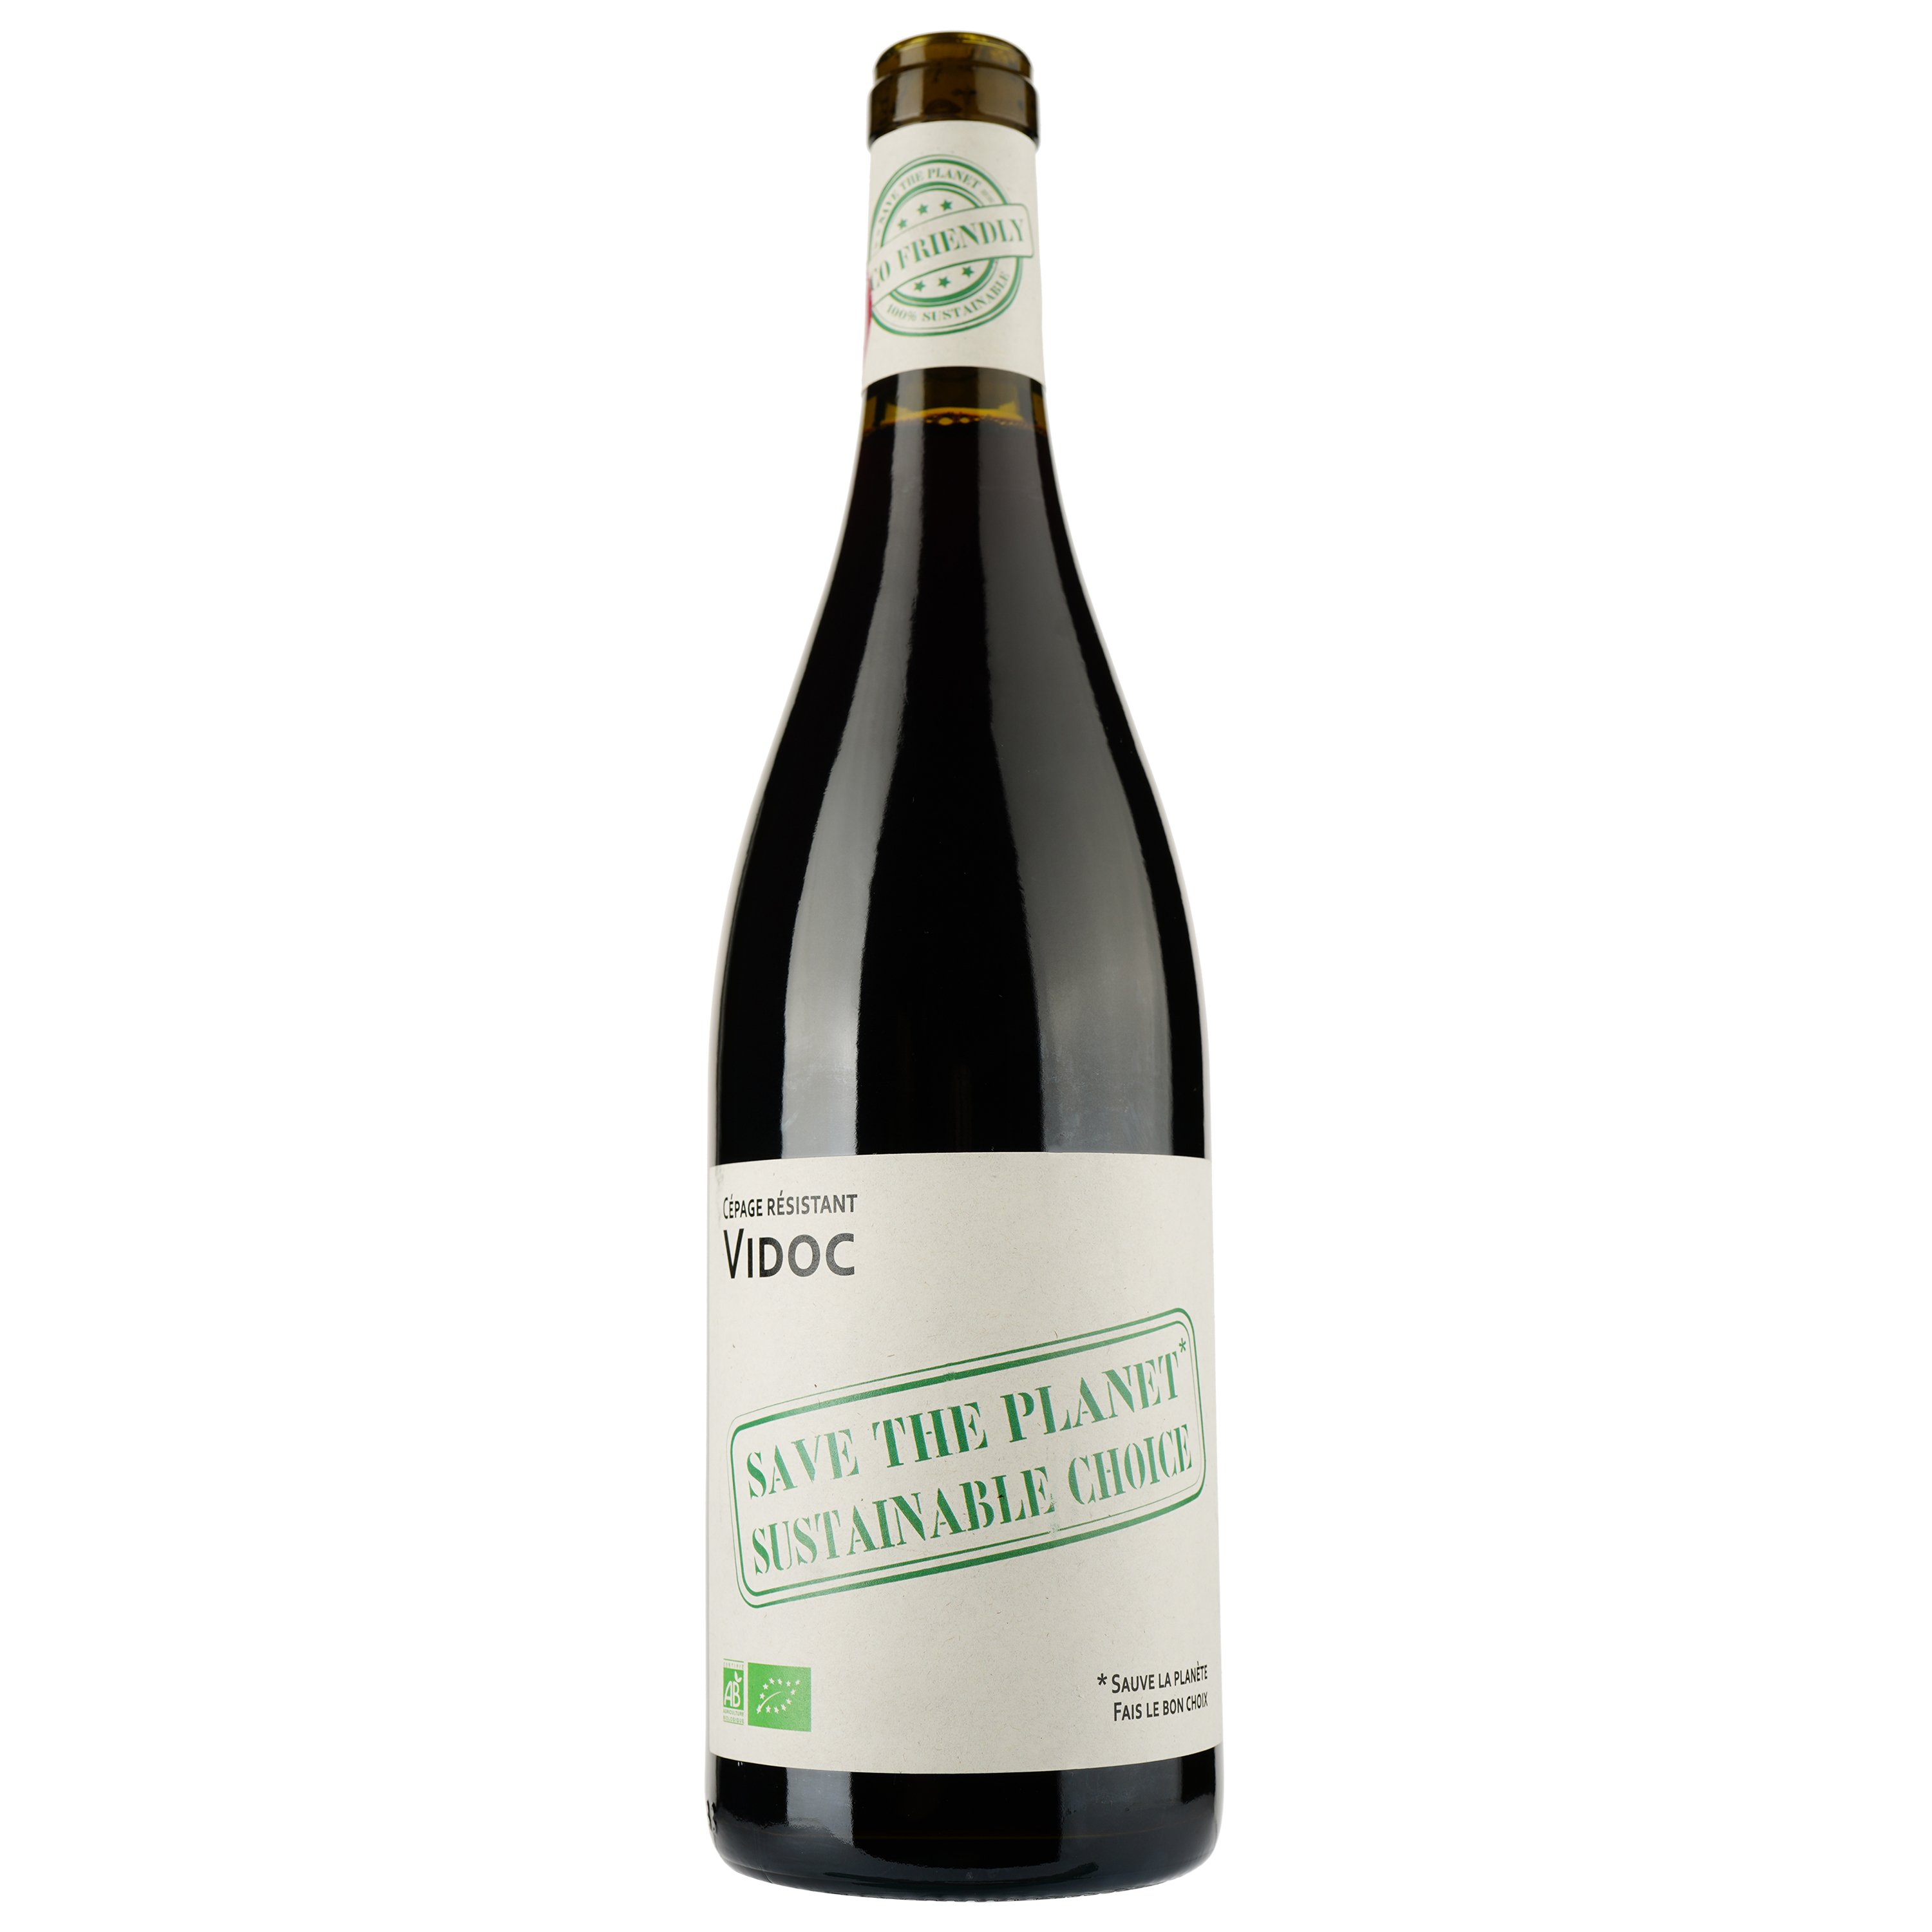 Вино Save The Planet Sustainable Choice Vidoc Vin de France, красное, сухое, 0.75 л - фото 1